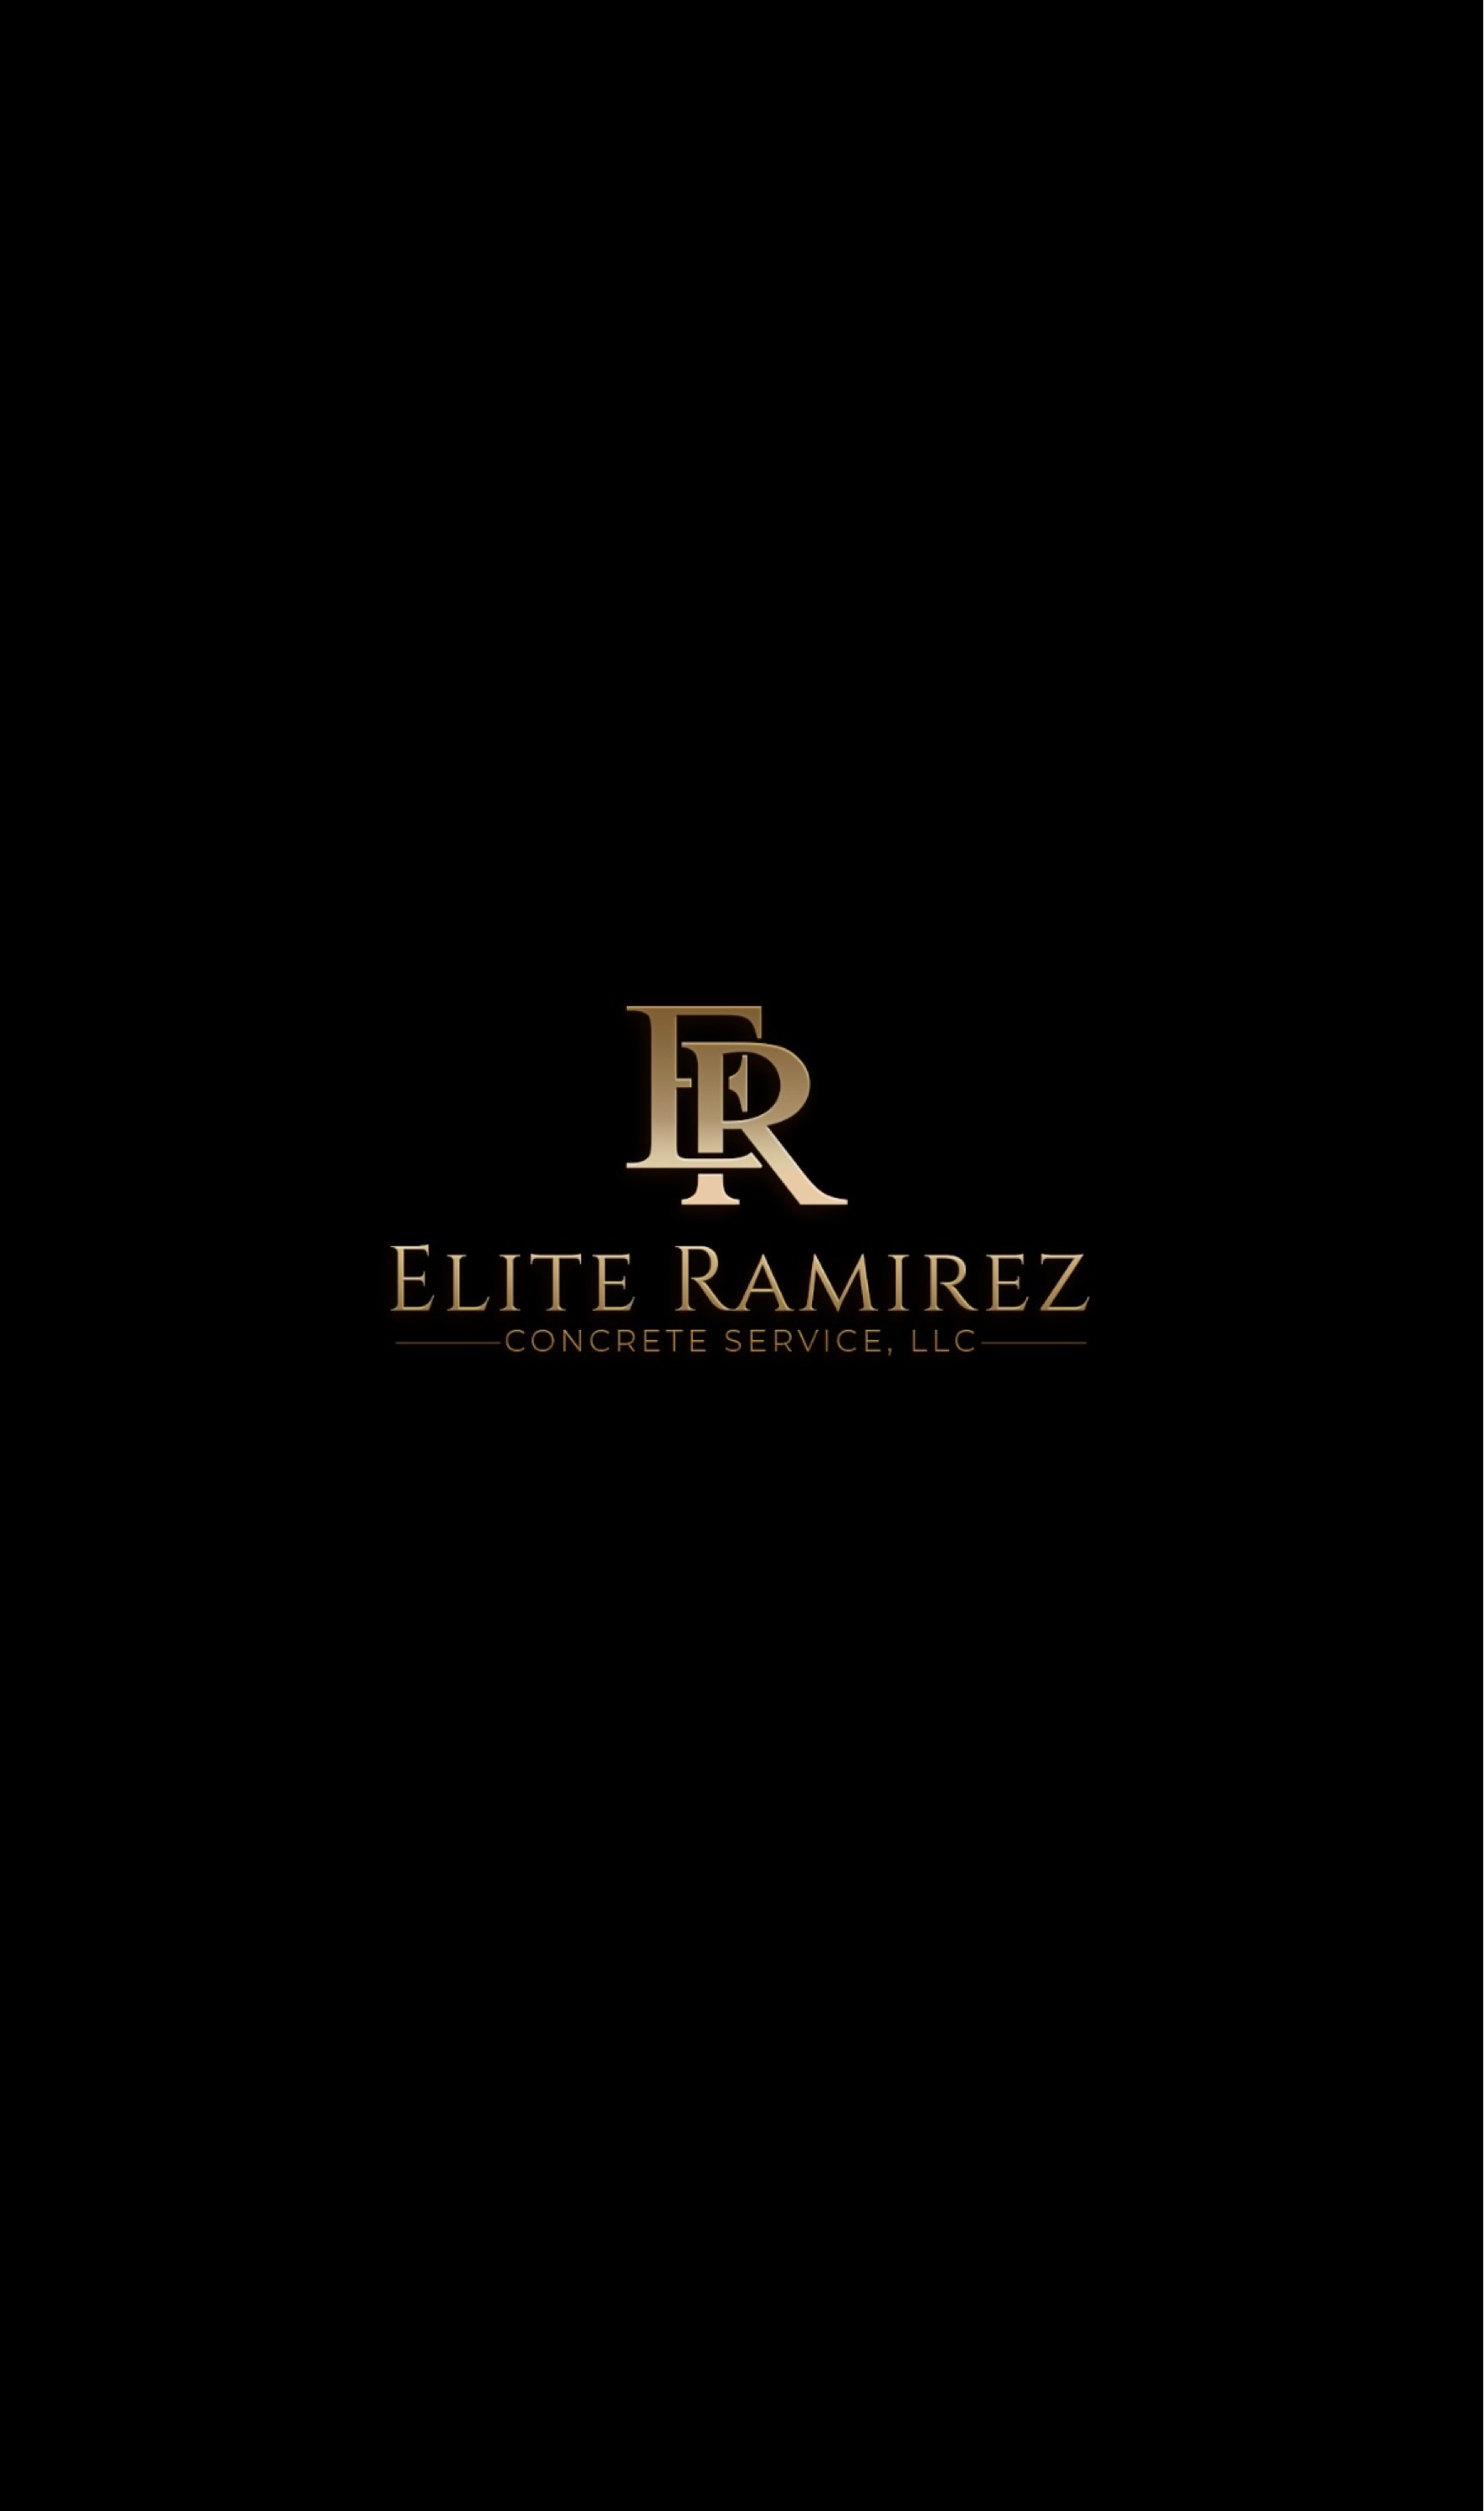 Elite Ramirez Concrete Service, LLC Logo